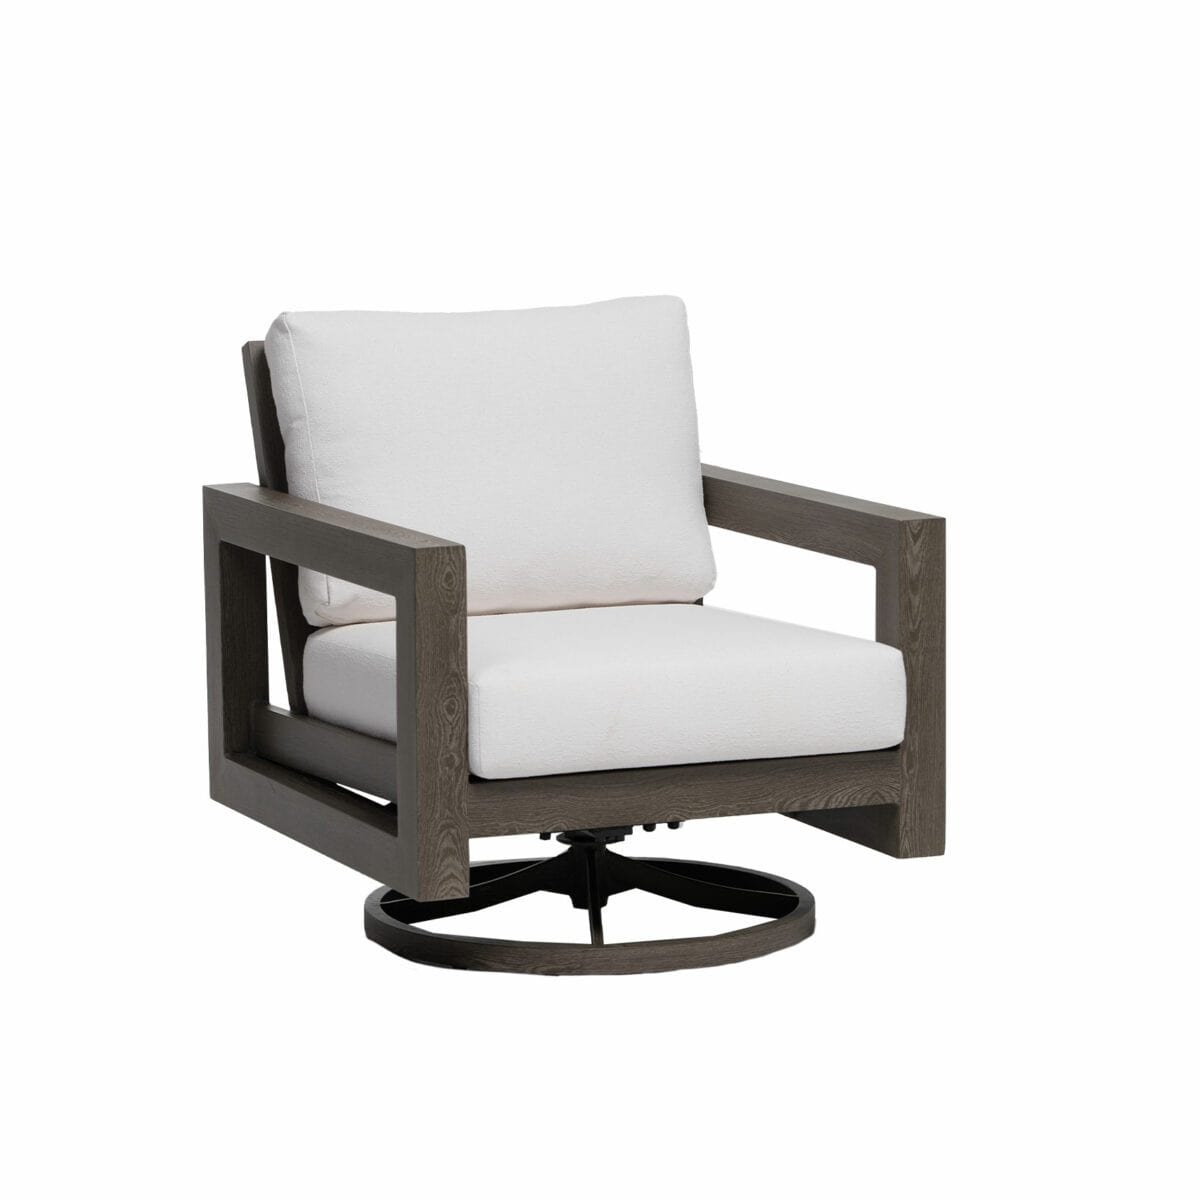 Ratana Furniture - Chairs Milano Swivel Rocker